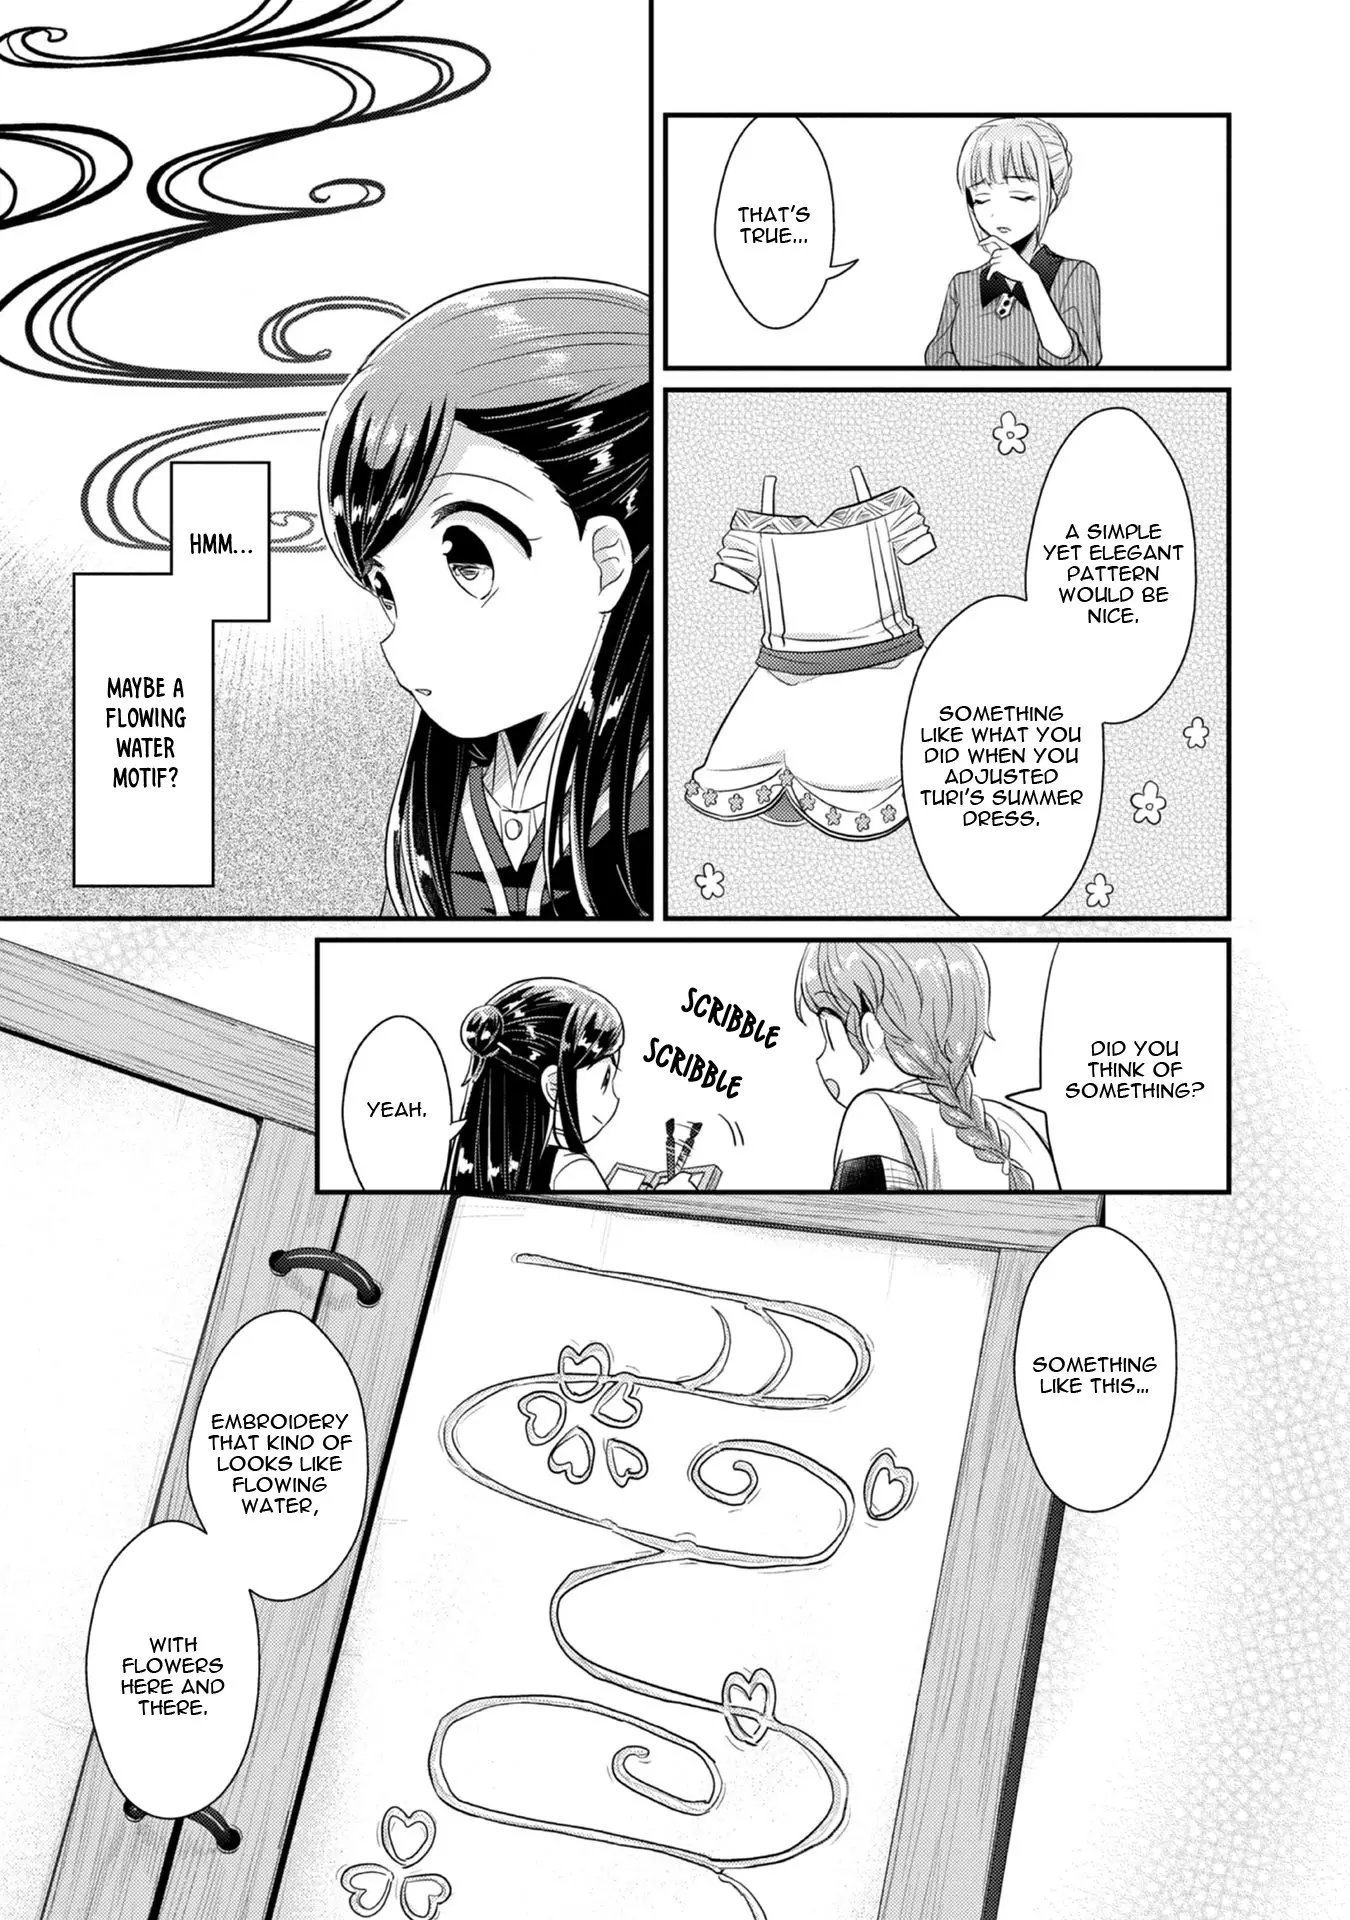 Manga Part 3 Volume 1, Ascendance of a Bookworm Wiki